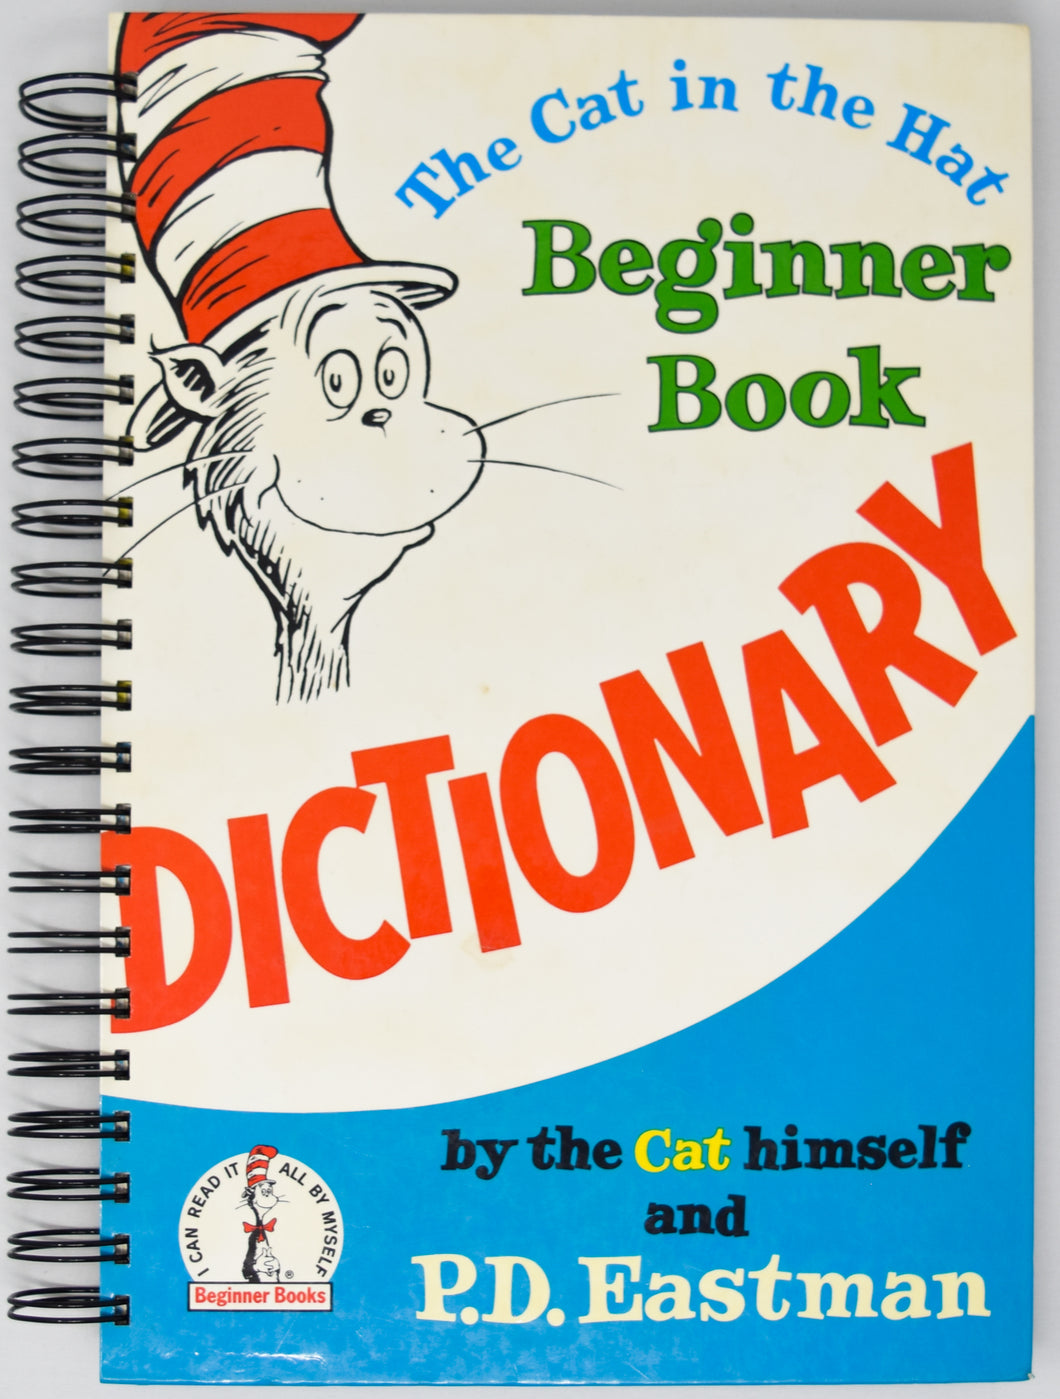 Beginner Book Dictionary